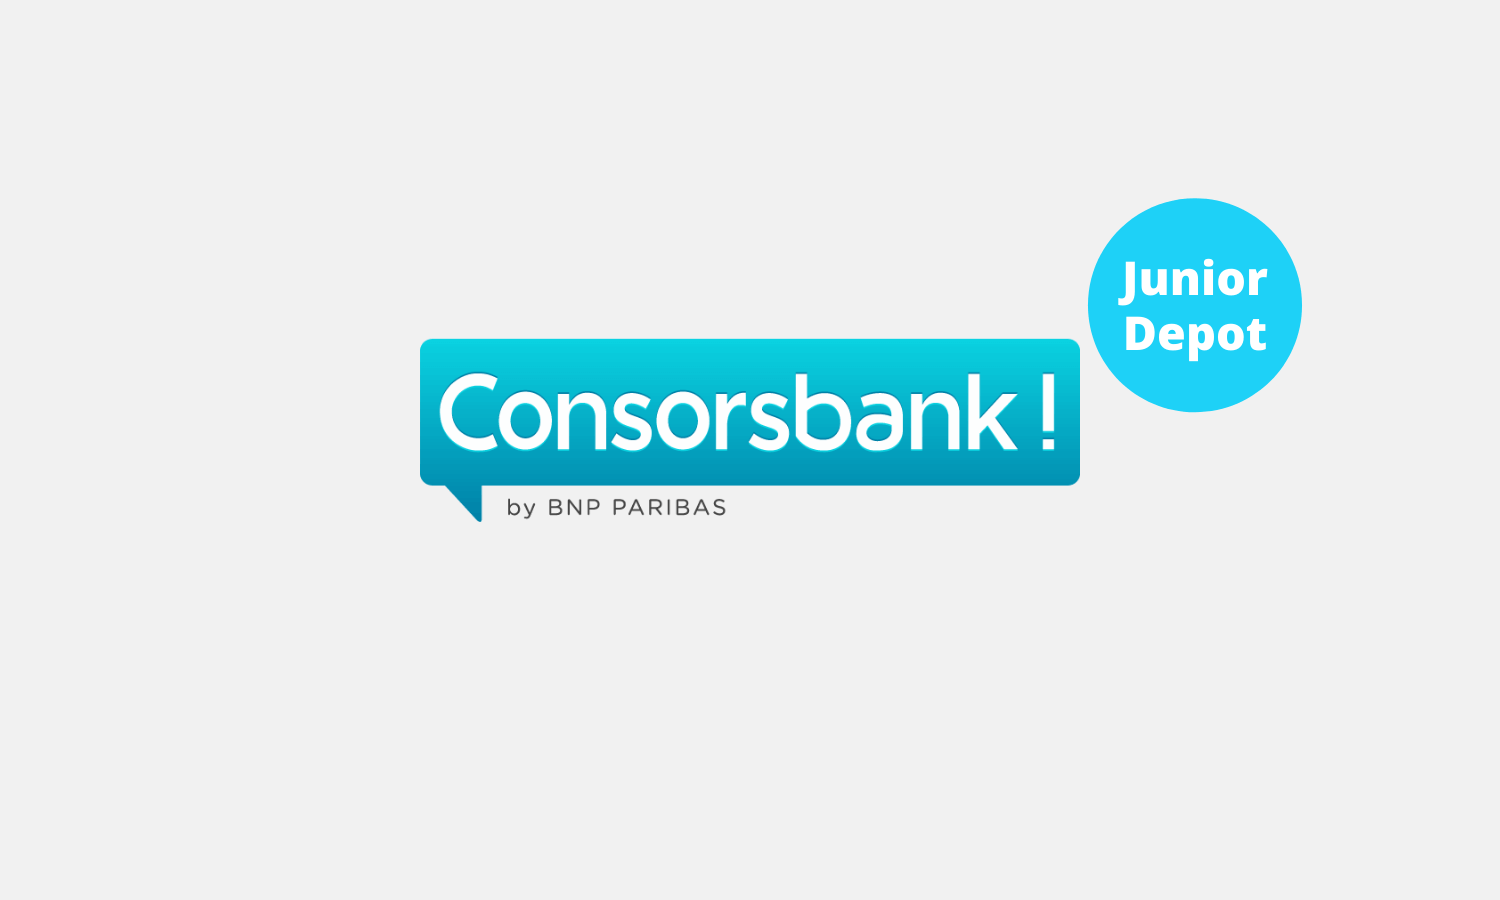 Consorsbank Junior Depot